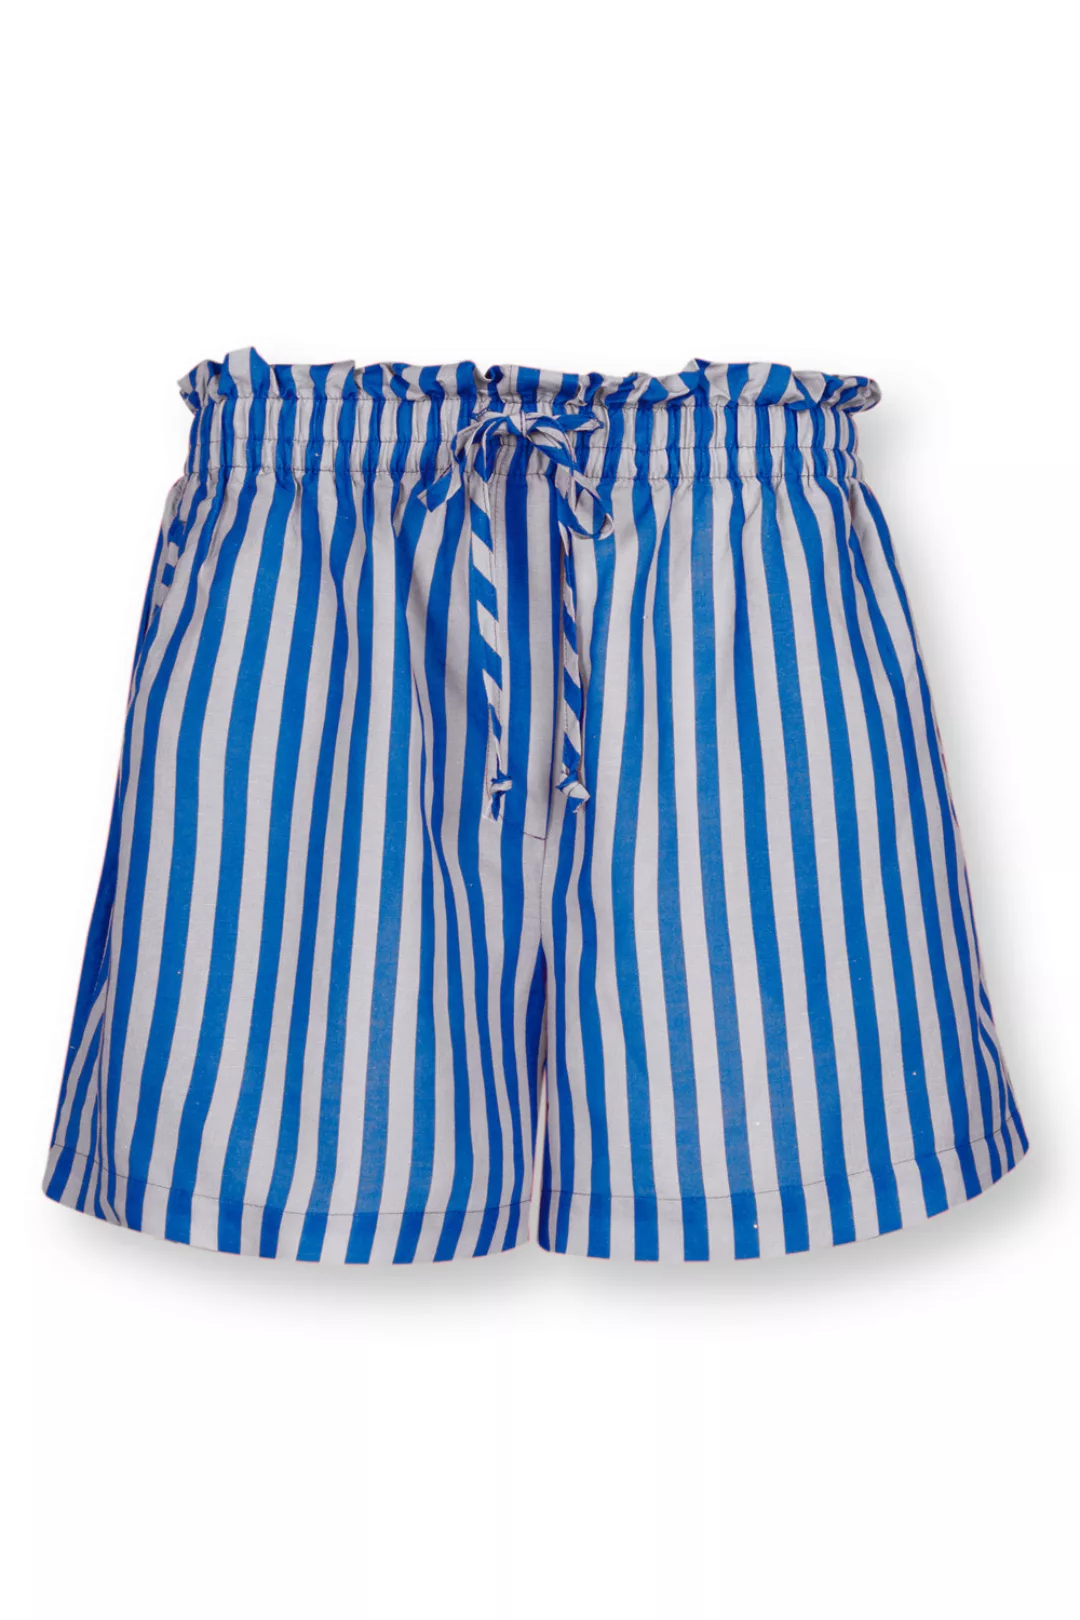 Pip Studio Bonita Sumo Stripe Shorts Lifestyle 40 blau günstig online kaufen